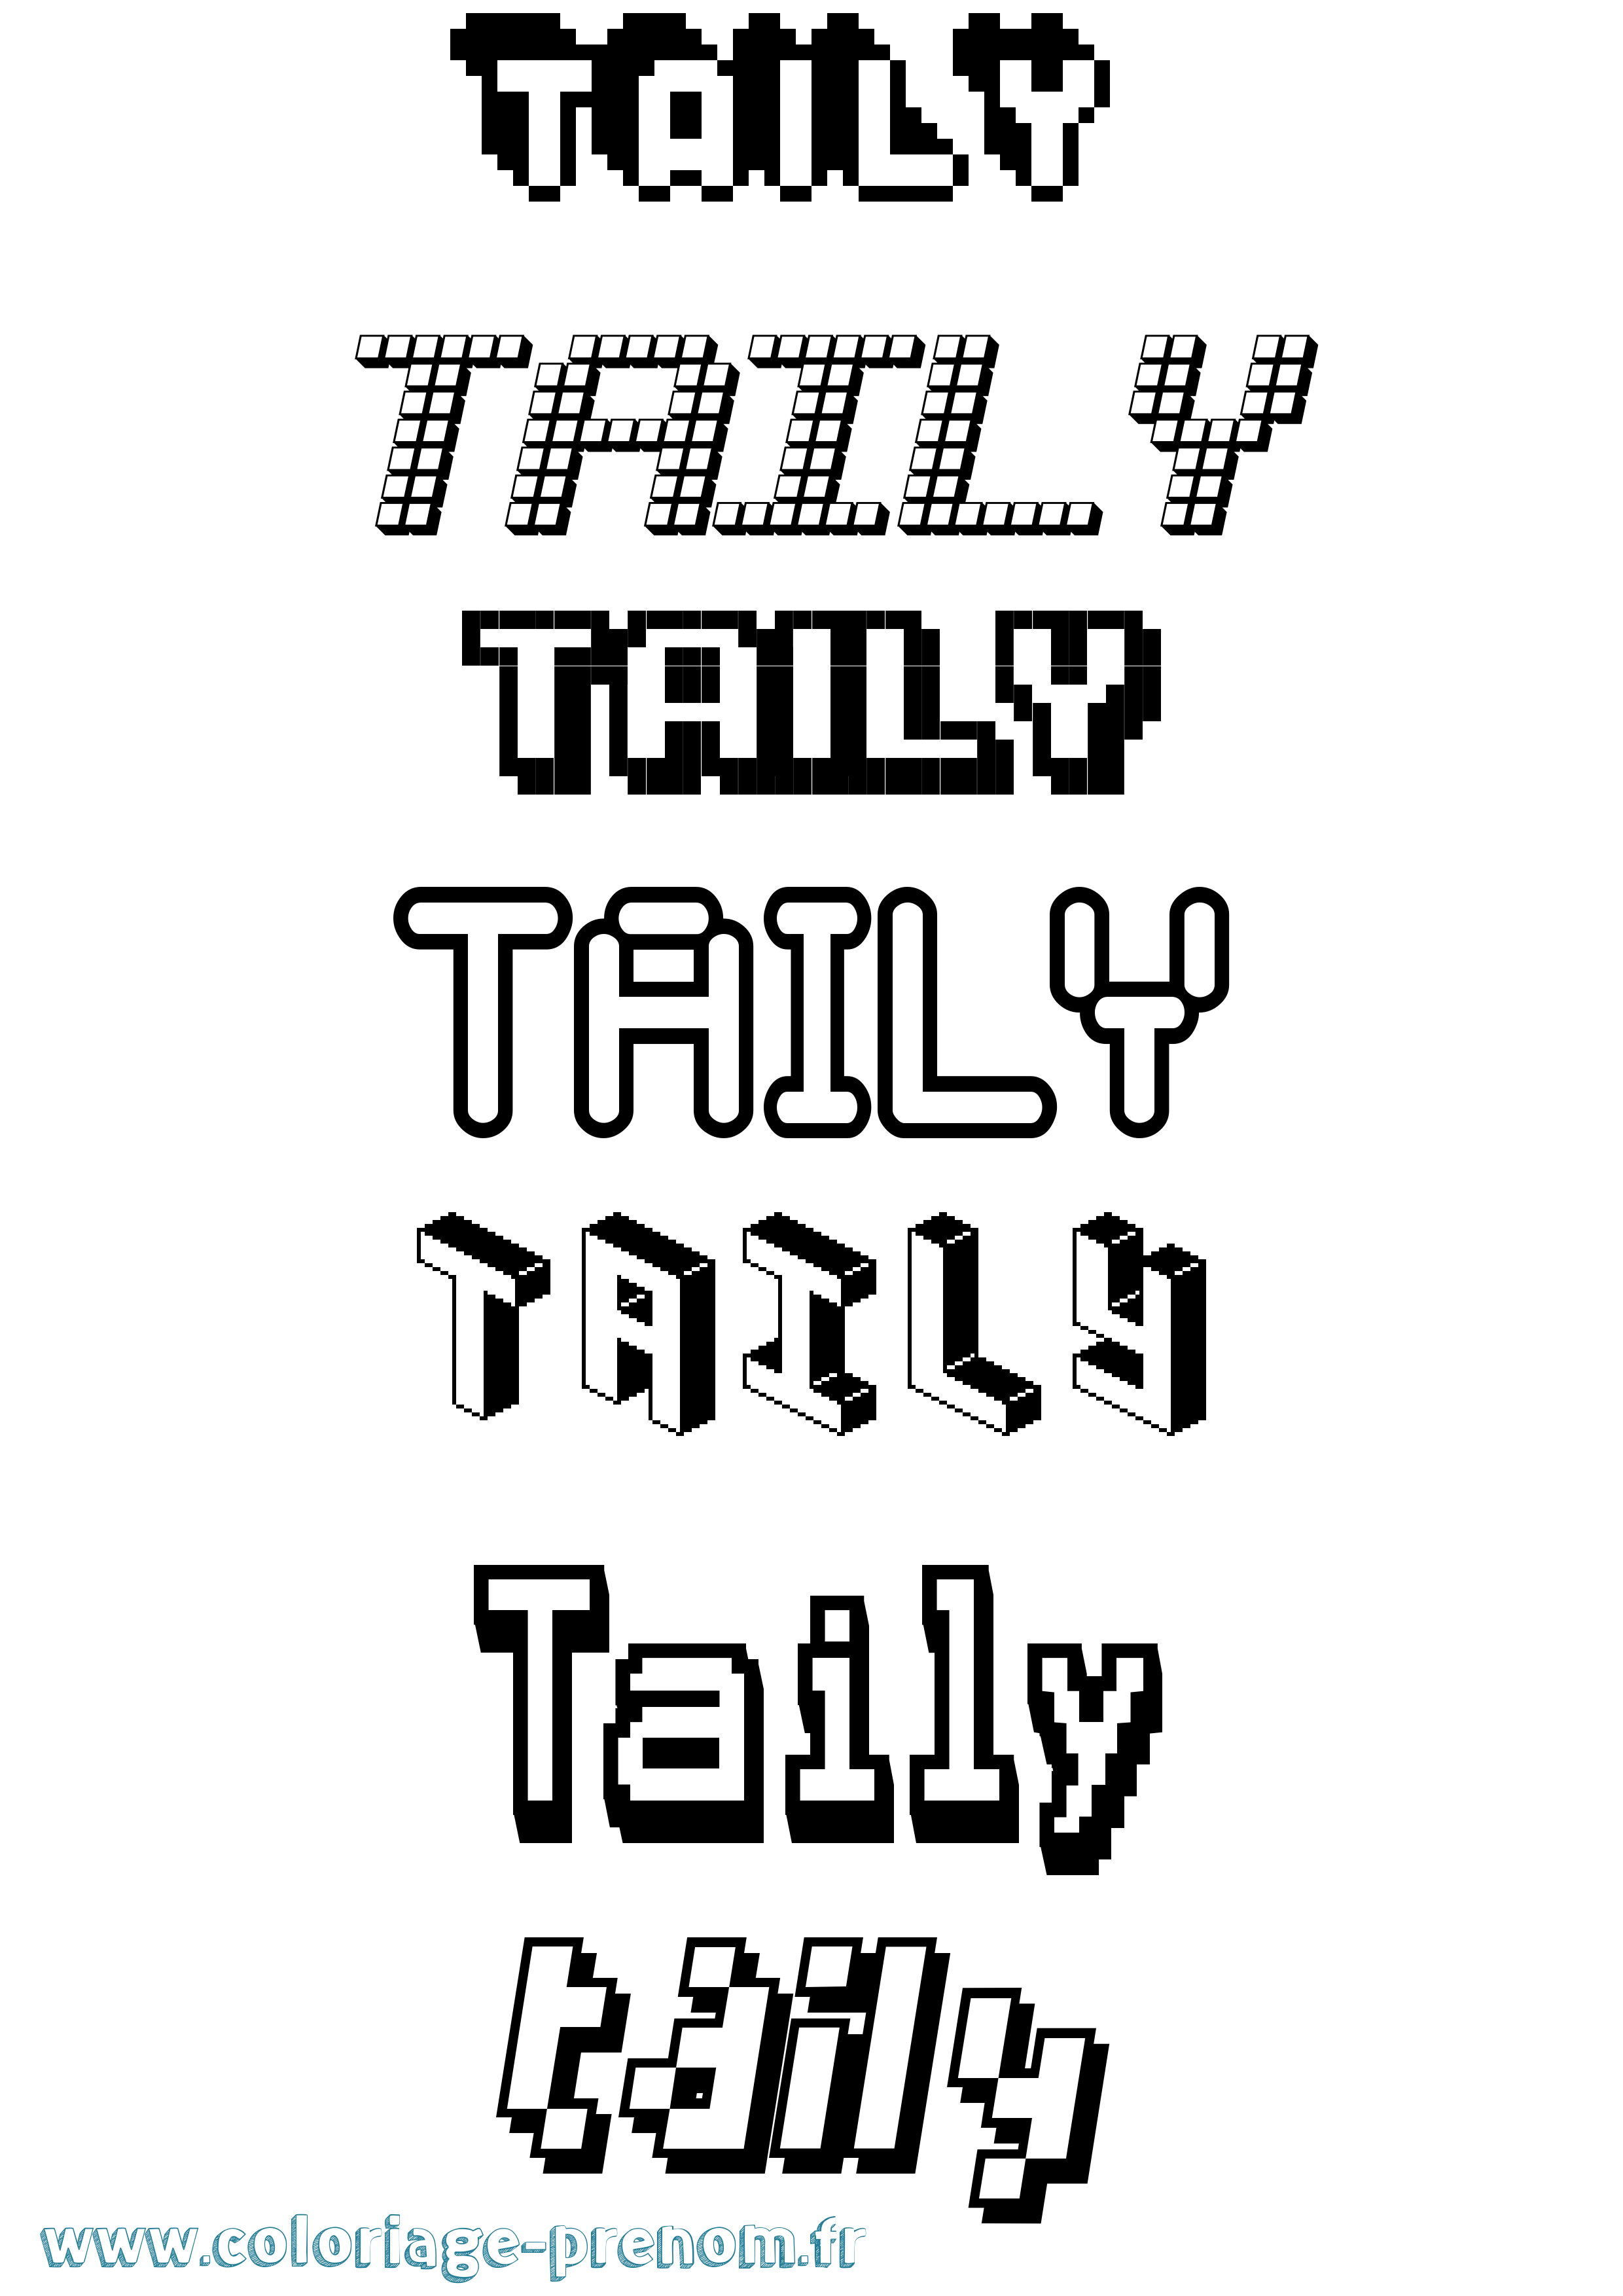 Coloriage prénom Taily Pixel